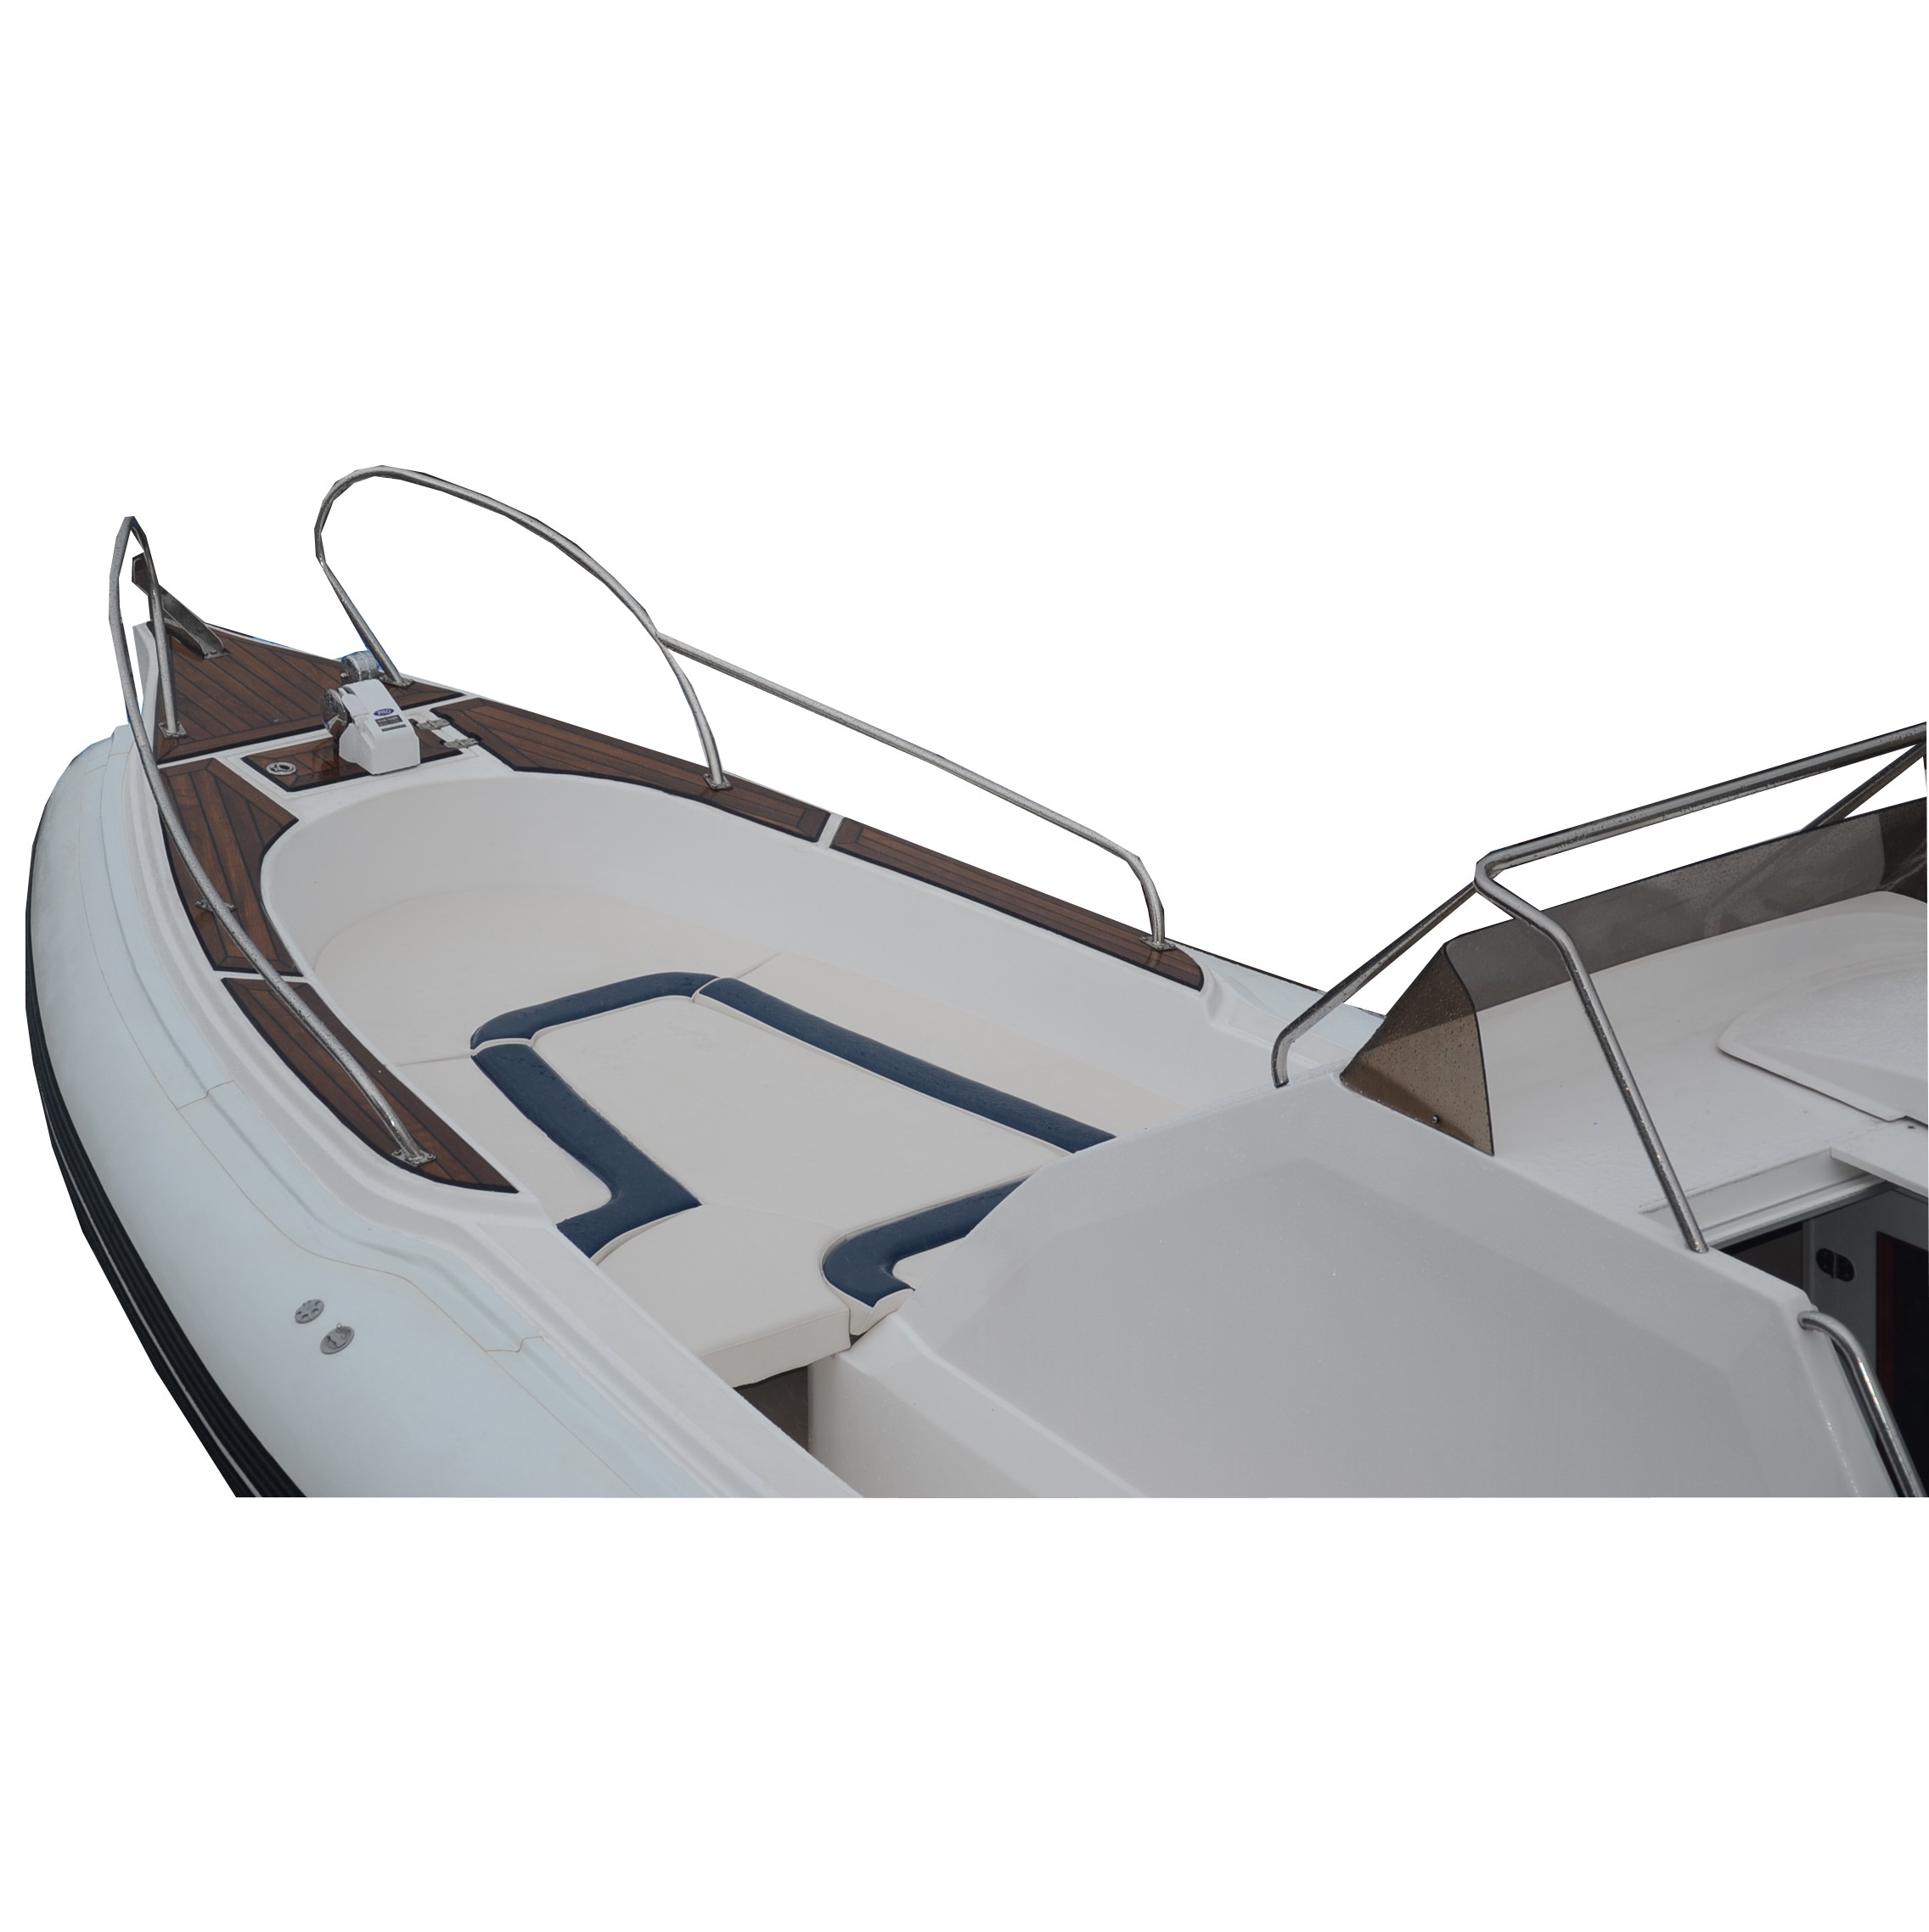 Rigid inflatable boat price